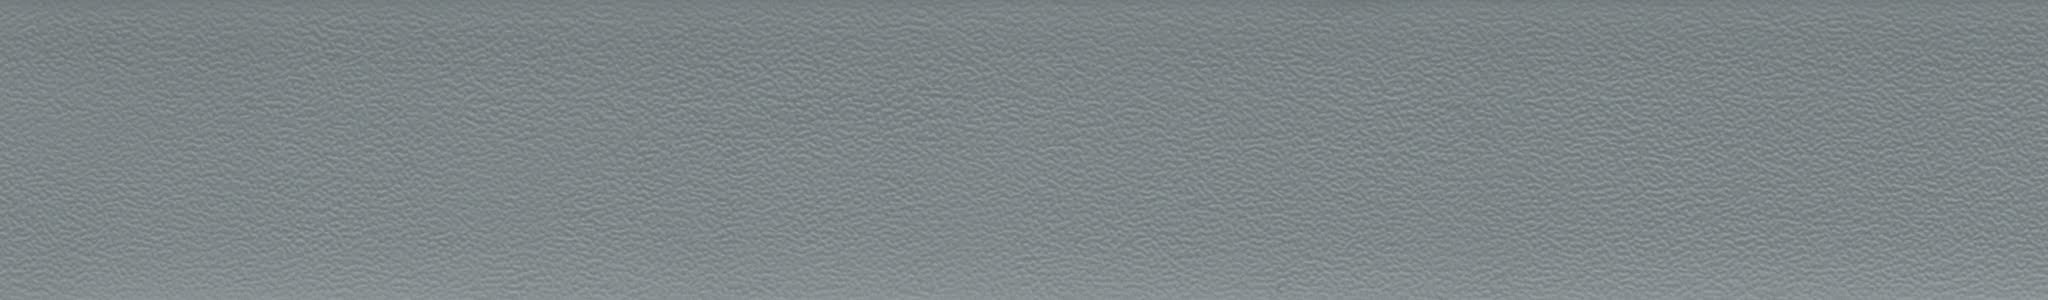 ABS 0162 PE Graphite Grey 42x2mm HU 172162